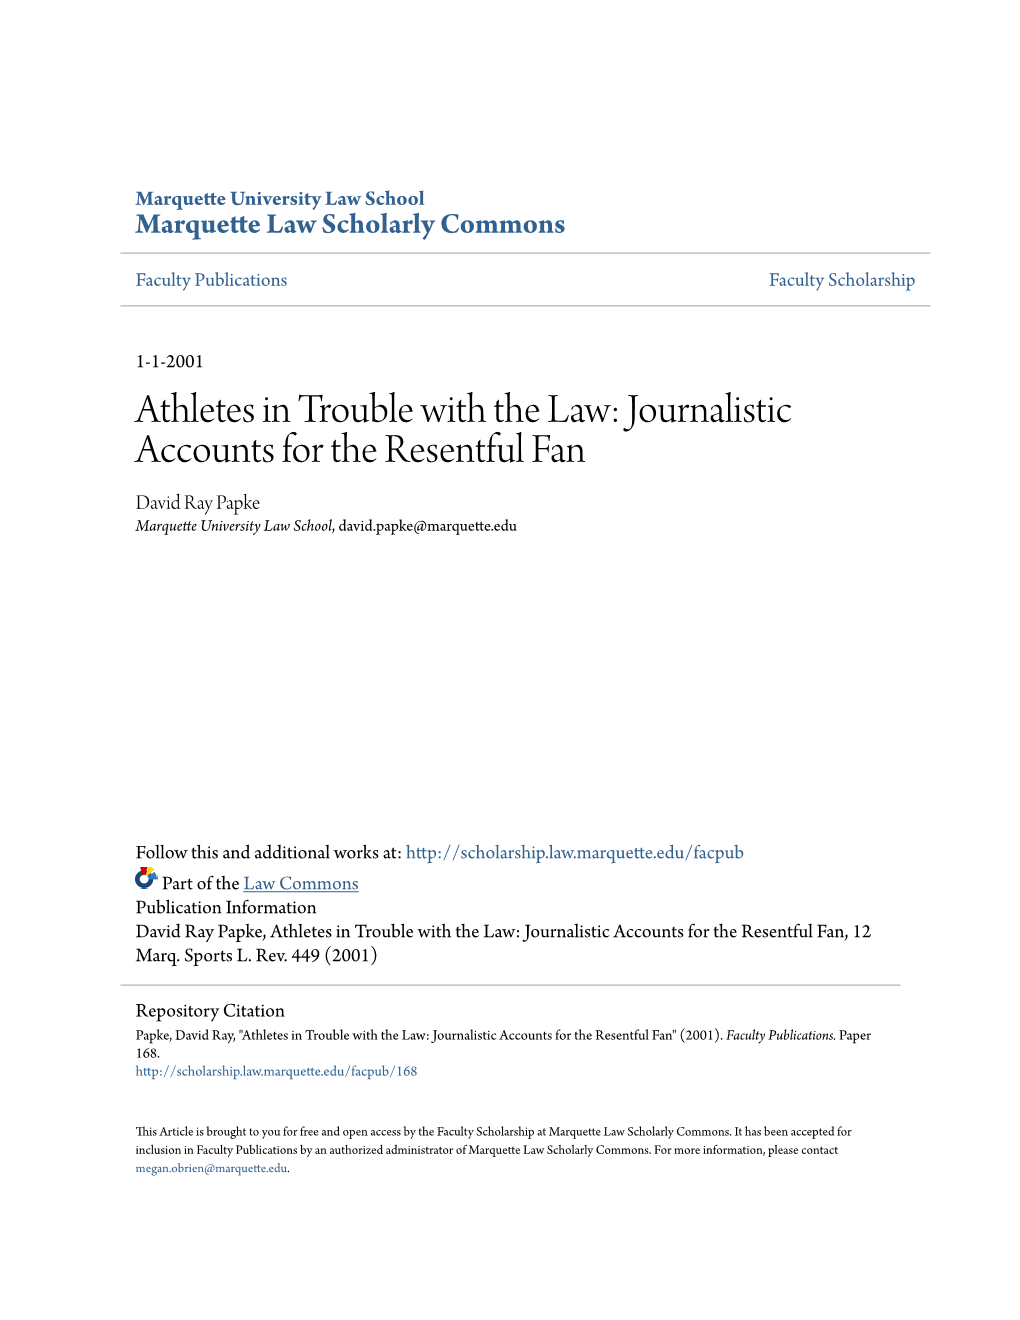 Journalistic Accounts for the Resentful Fan David Ray Papke Marquette University Law School, David.Papke@Marquette.Edu